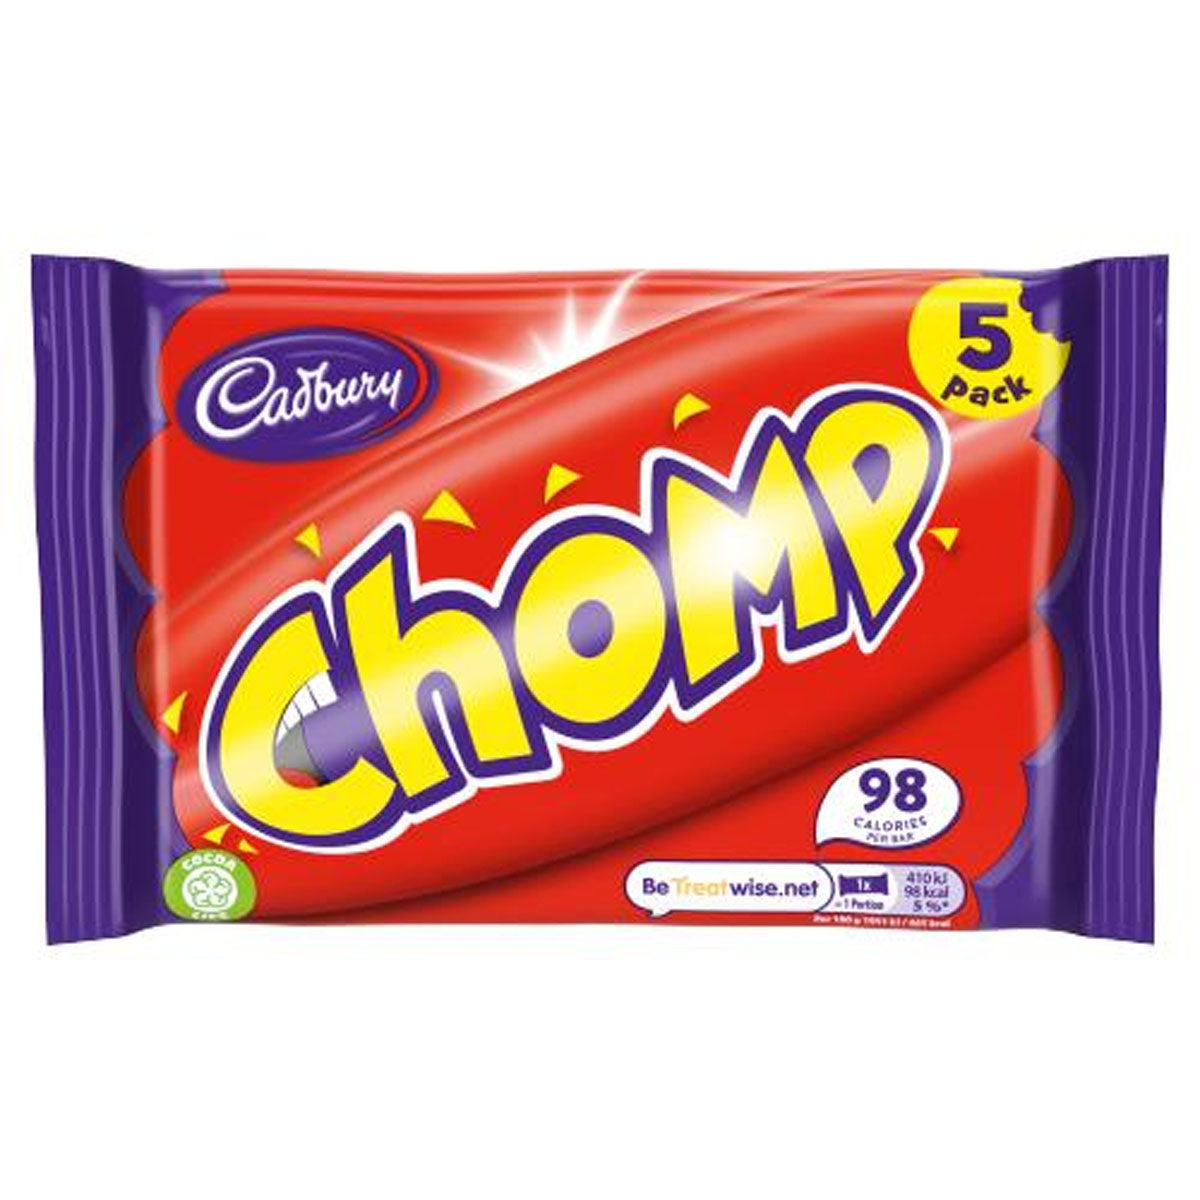 Cadbury - Chomp Bar - 5 Pack 105g - Continental Food Store